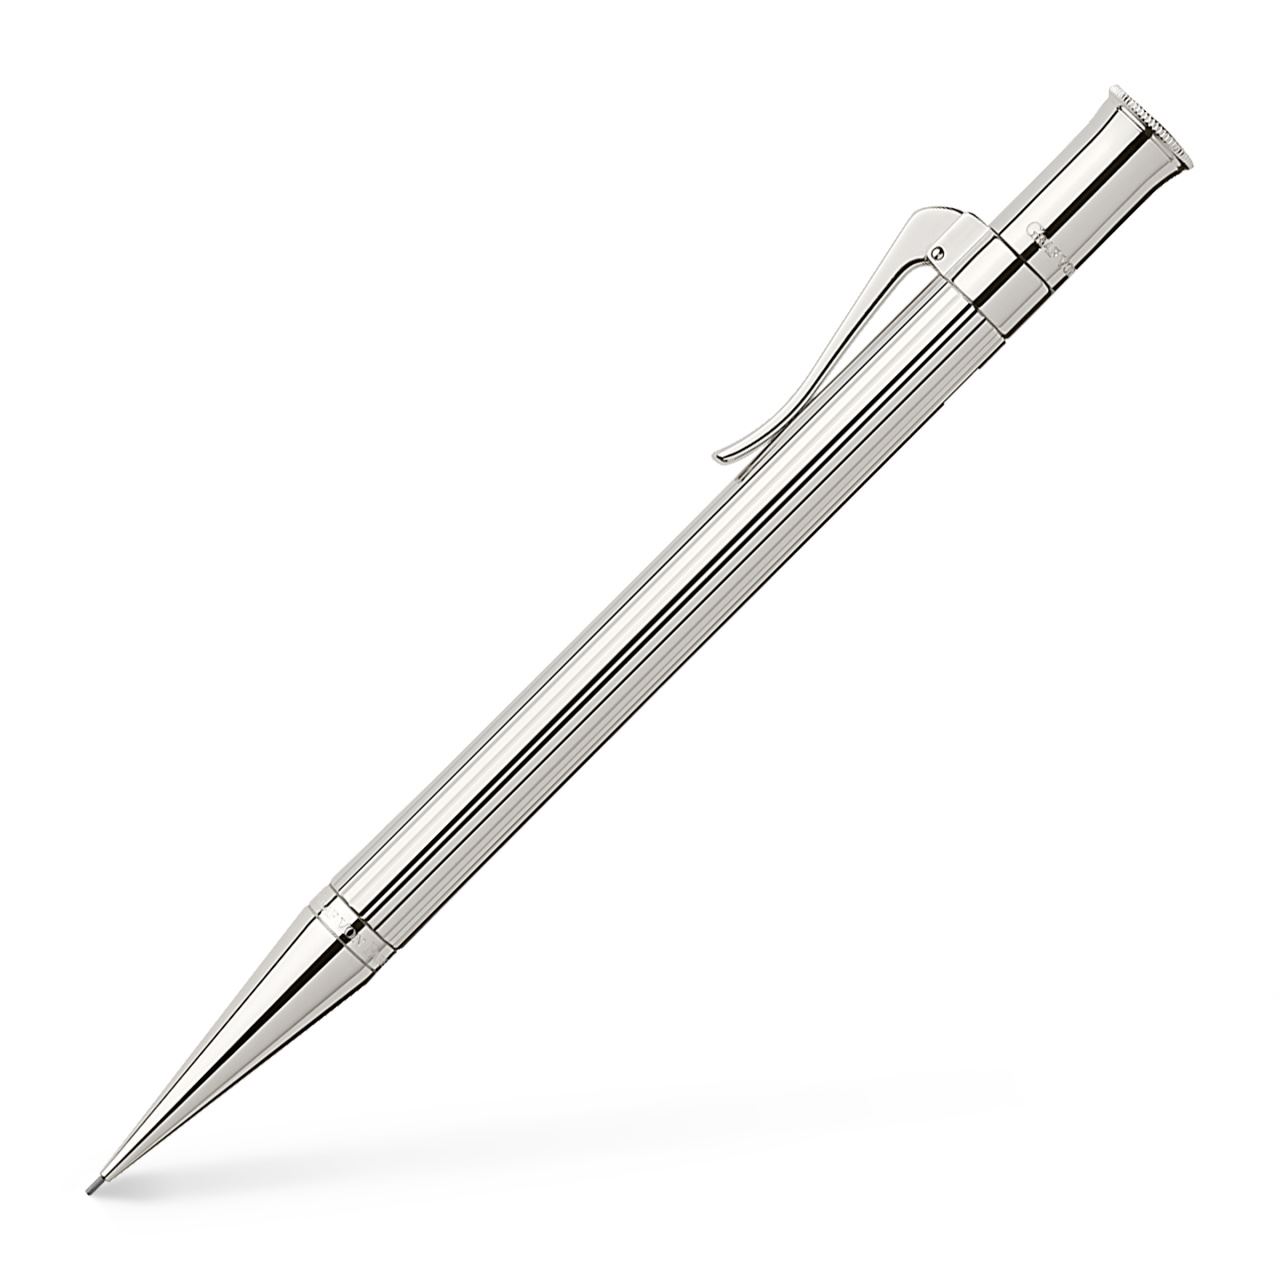 Graf-von-Faber-Castell - Propelling pencil Classic platinum-plated